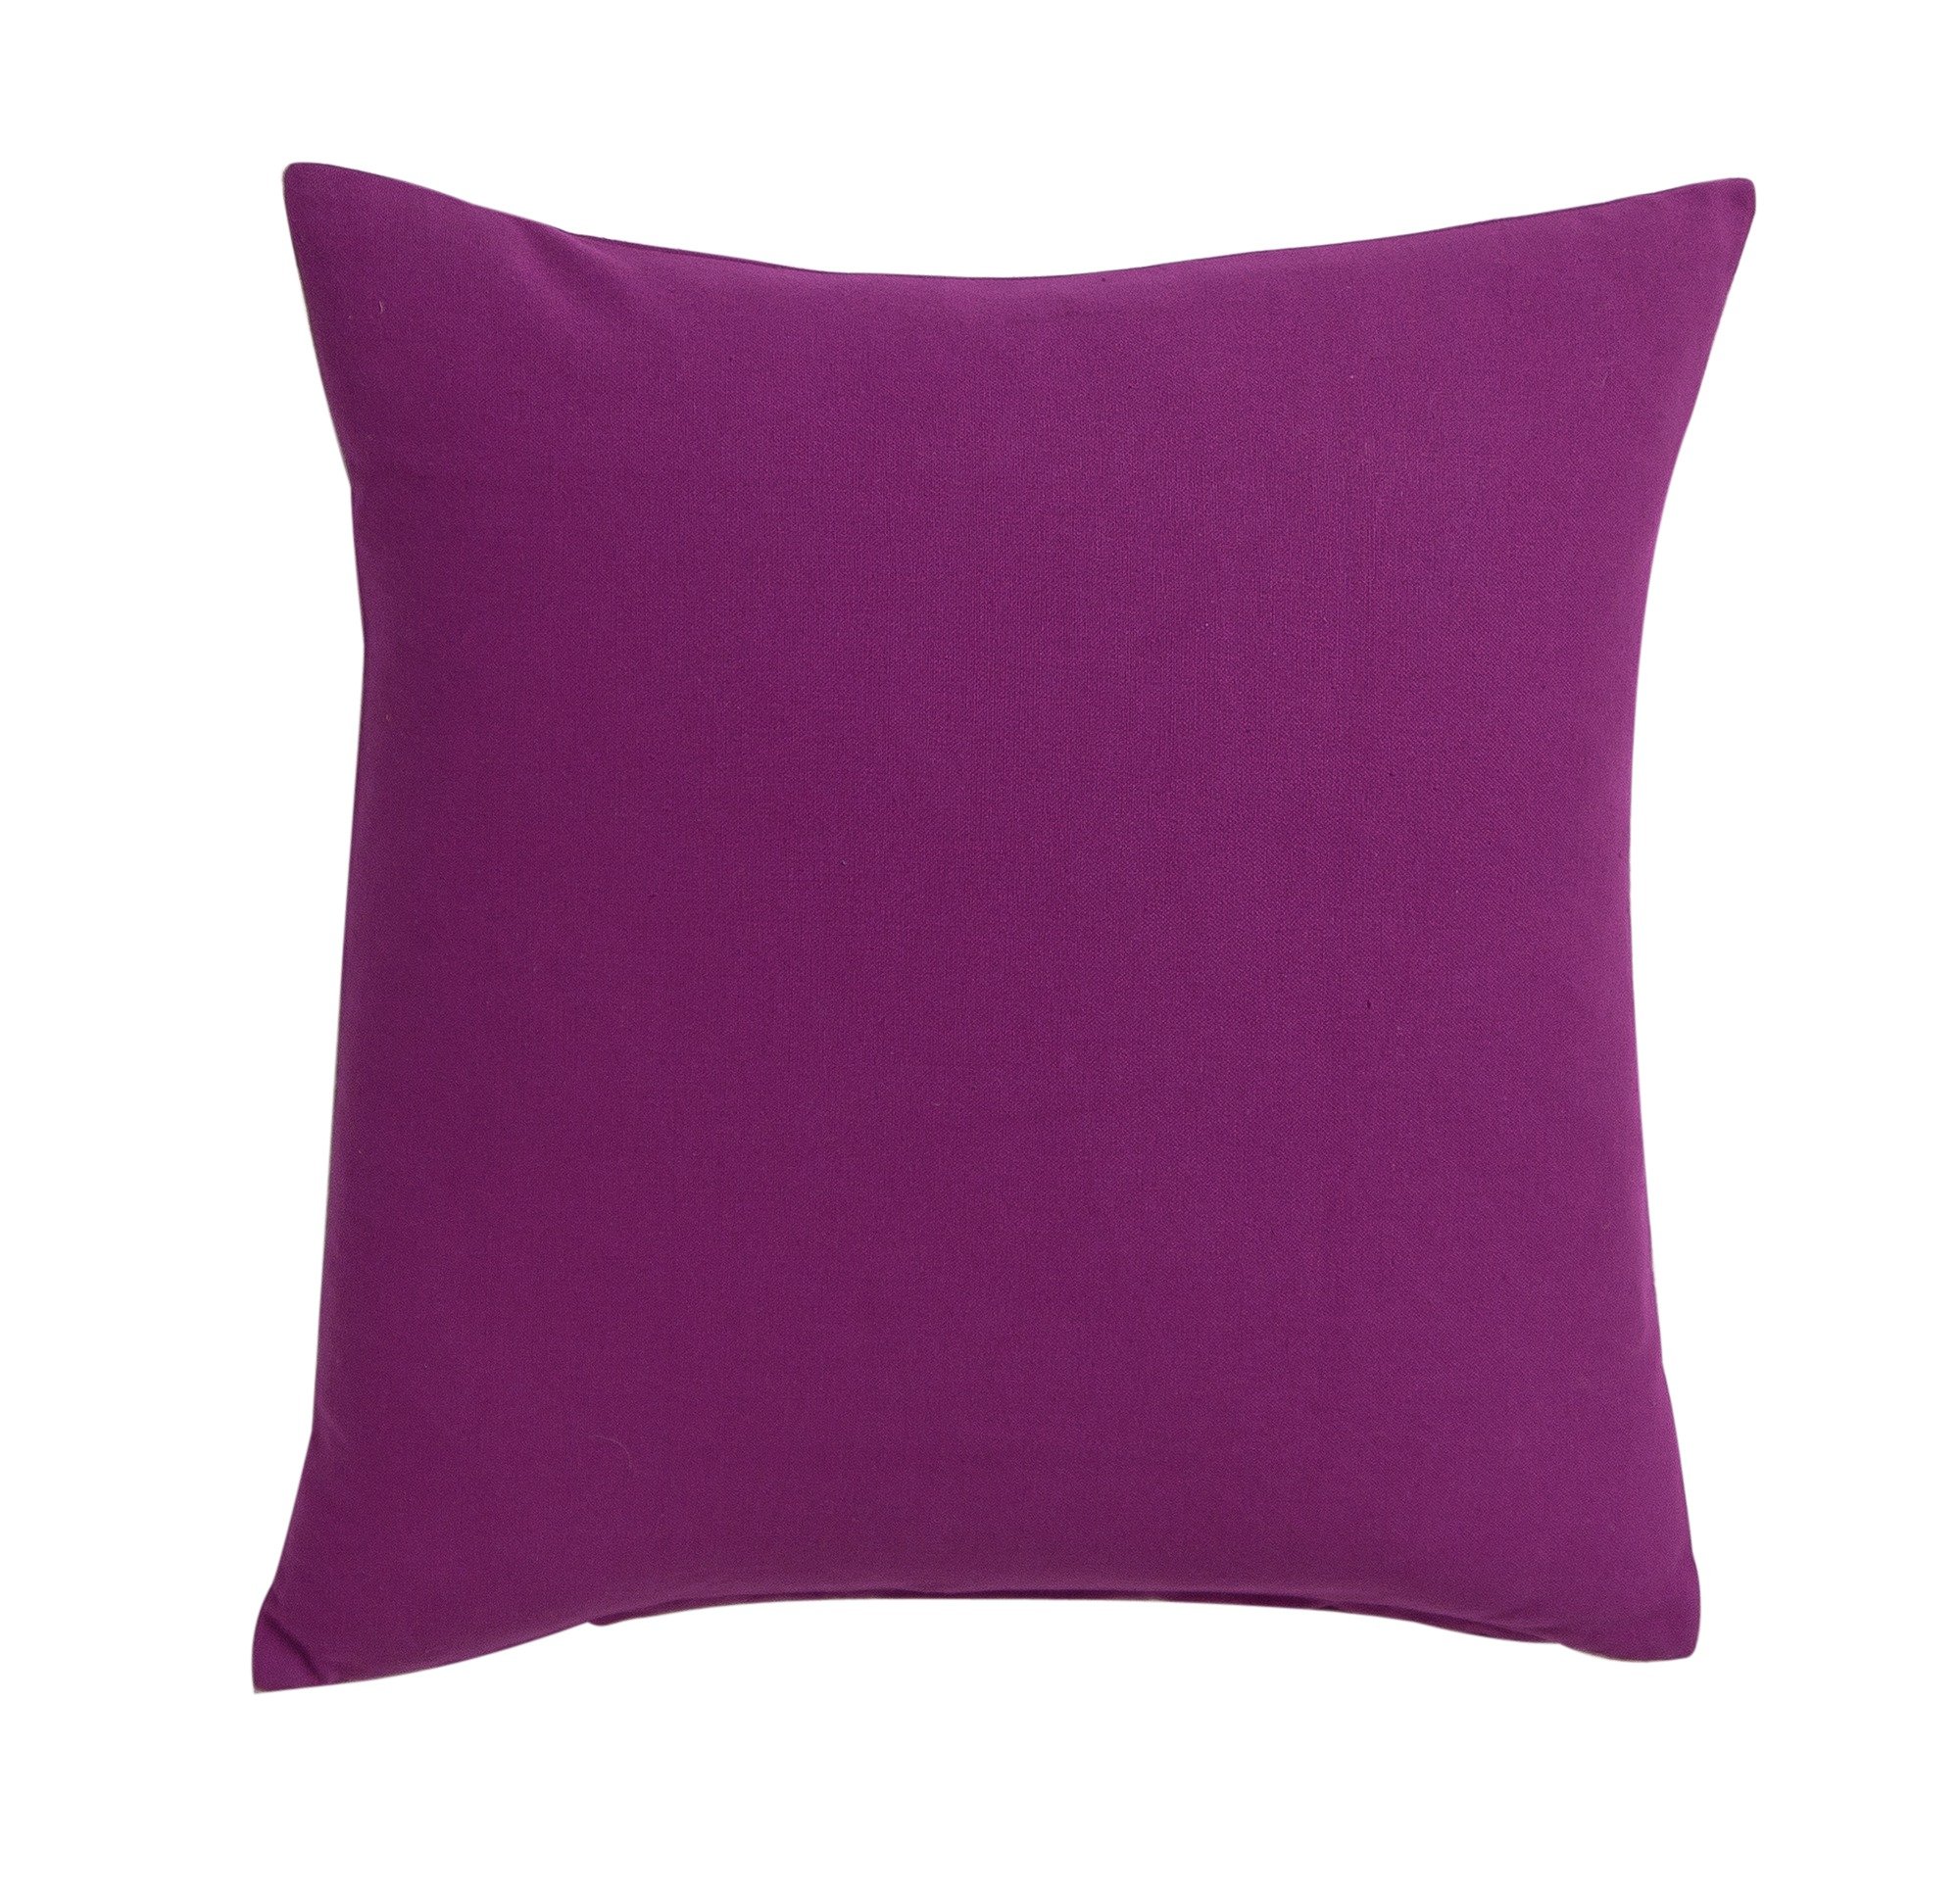 ColourMatch Cotton Cushion - Grape. Review